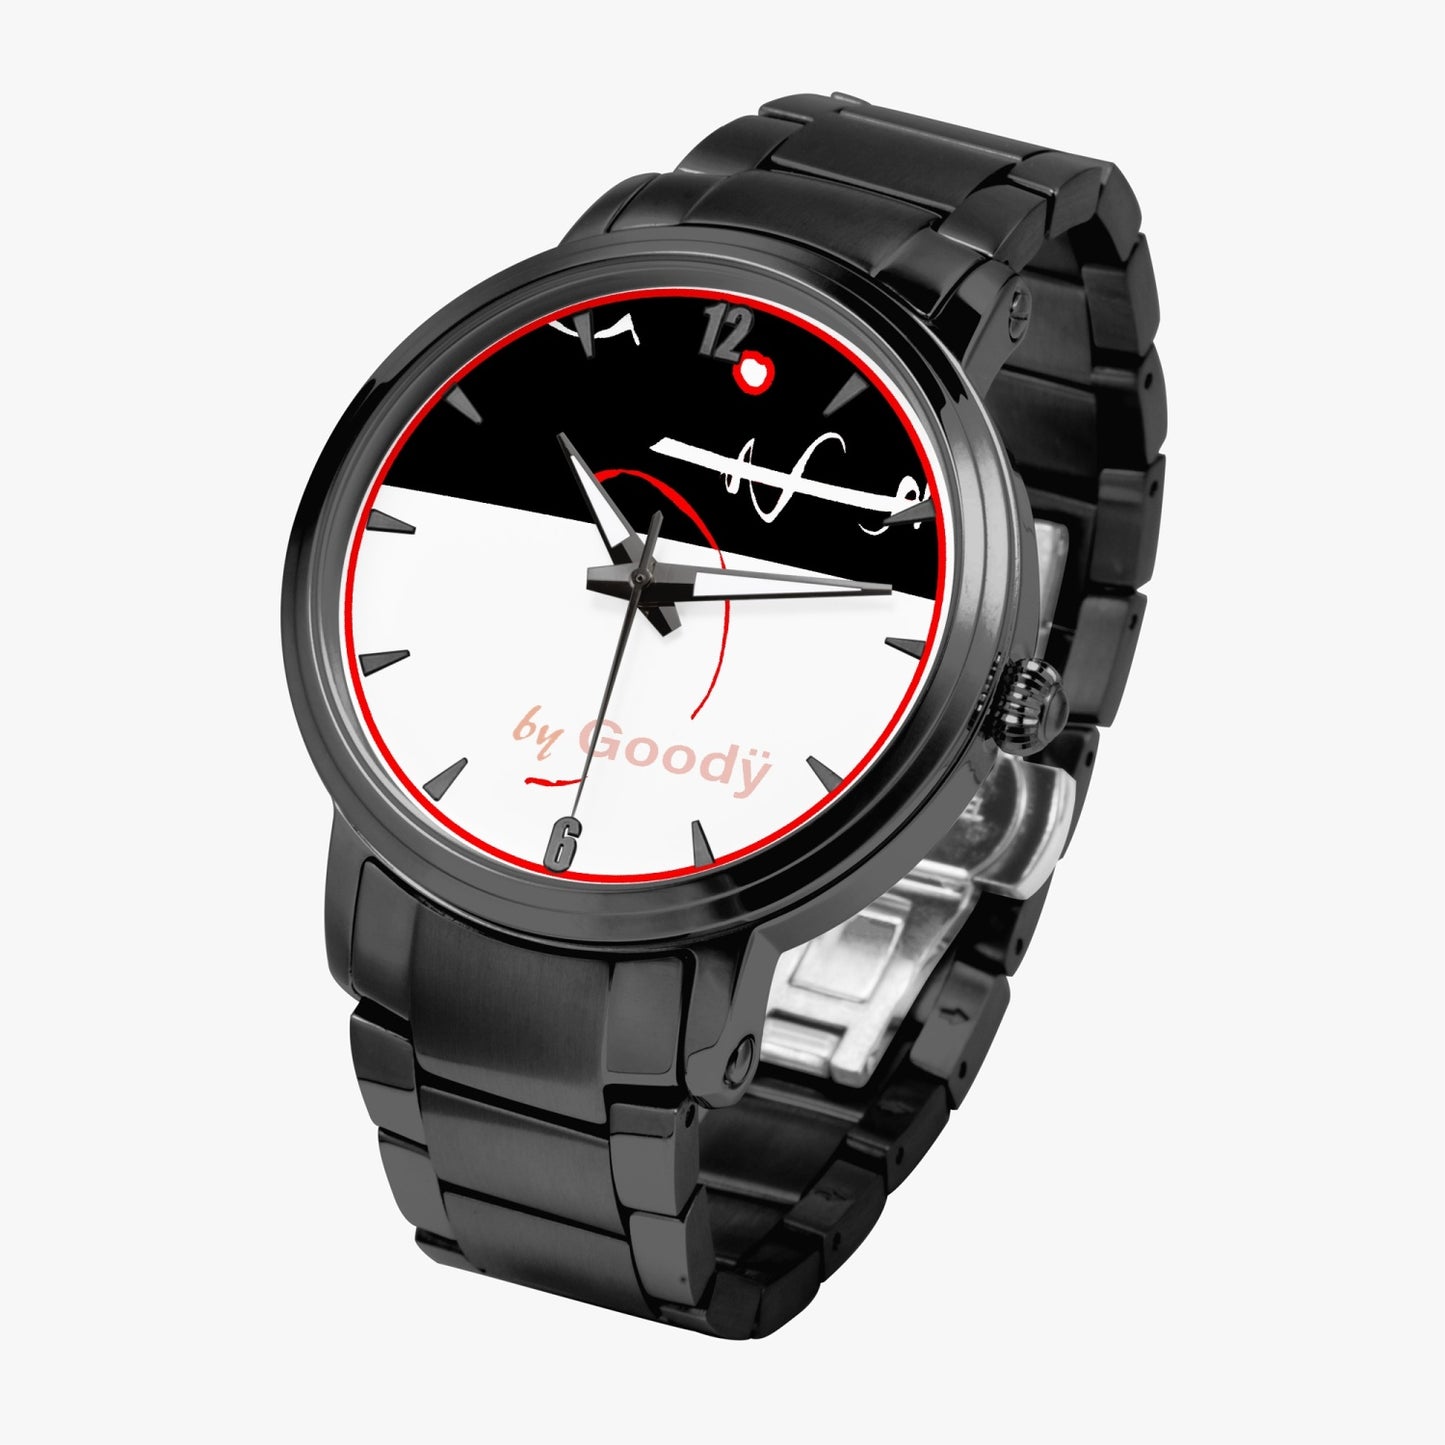 Automatic steel bracelet watch "Logola" (with indicators)